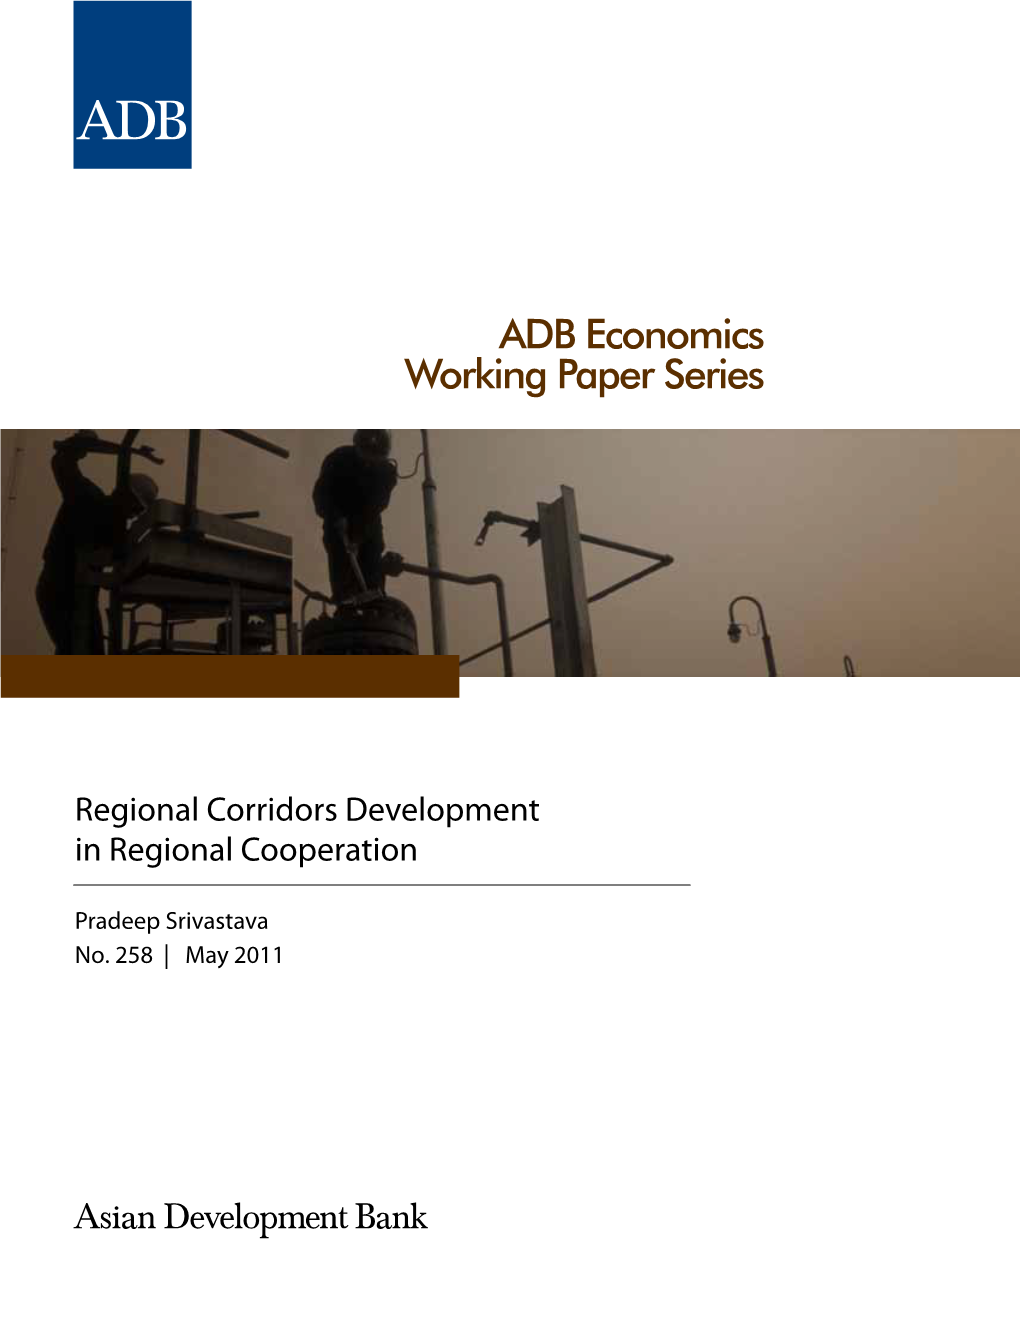 Regional Corridors Development in Regional Cooperation (No. 258)